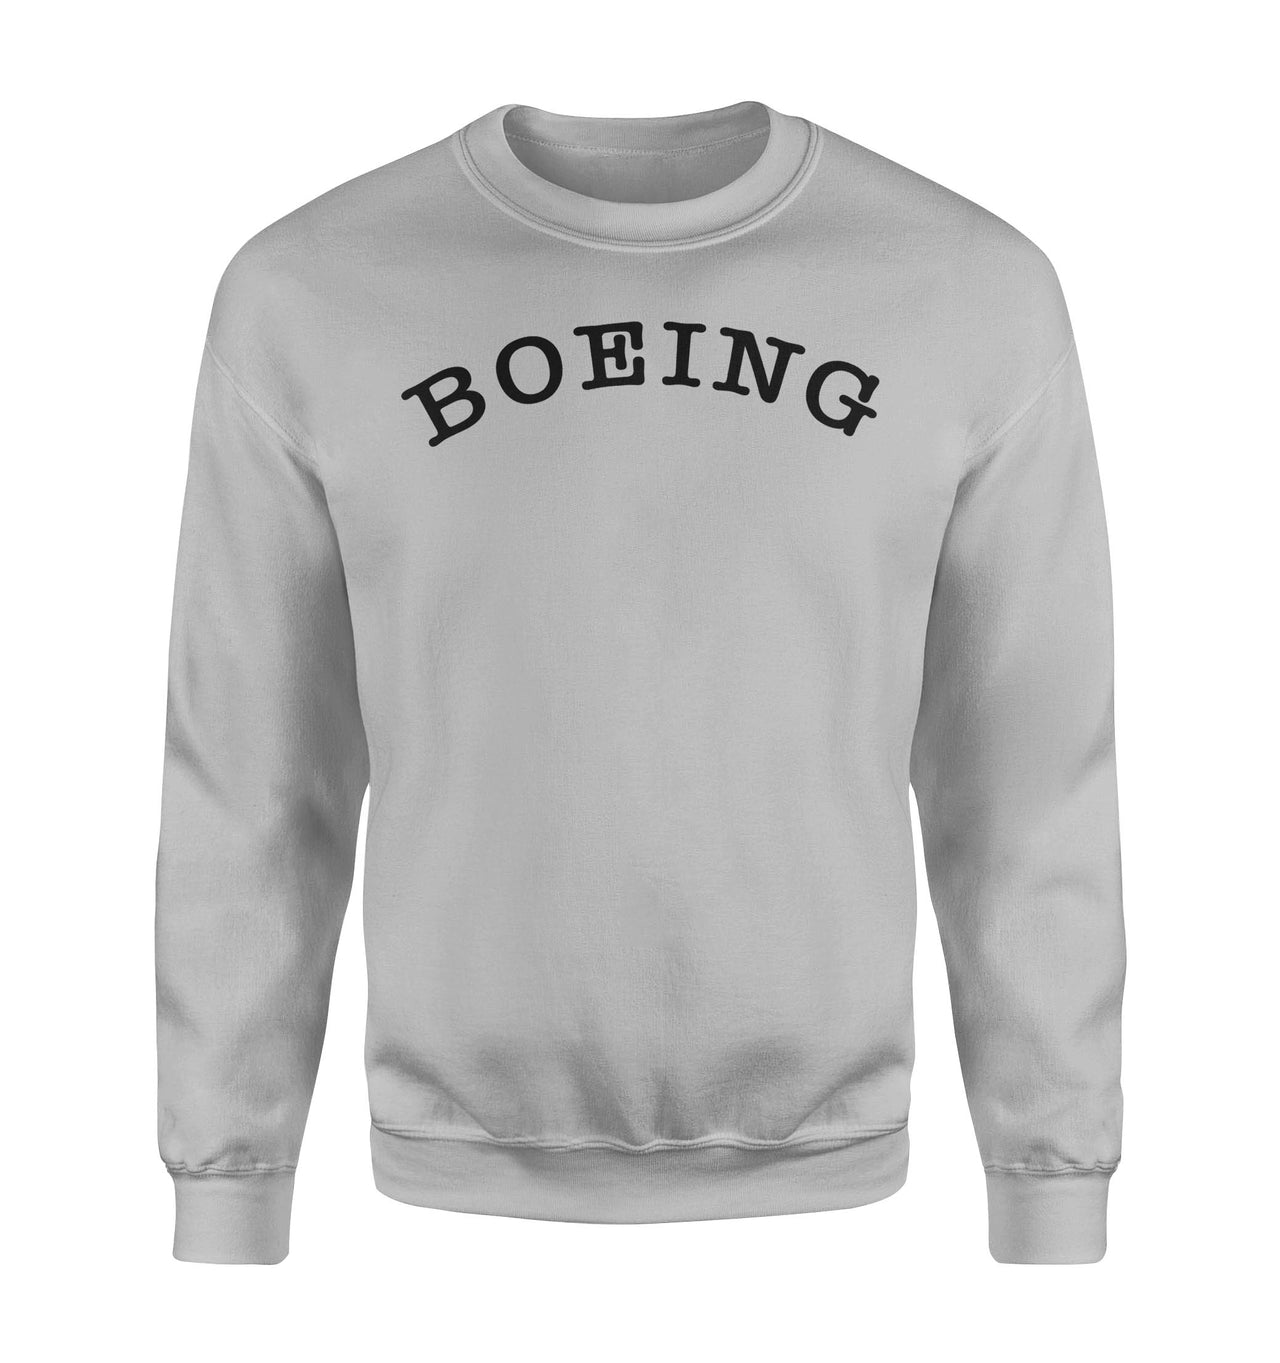 Special Boeing Text Designed Sweatshirts